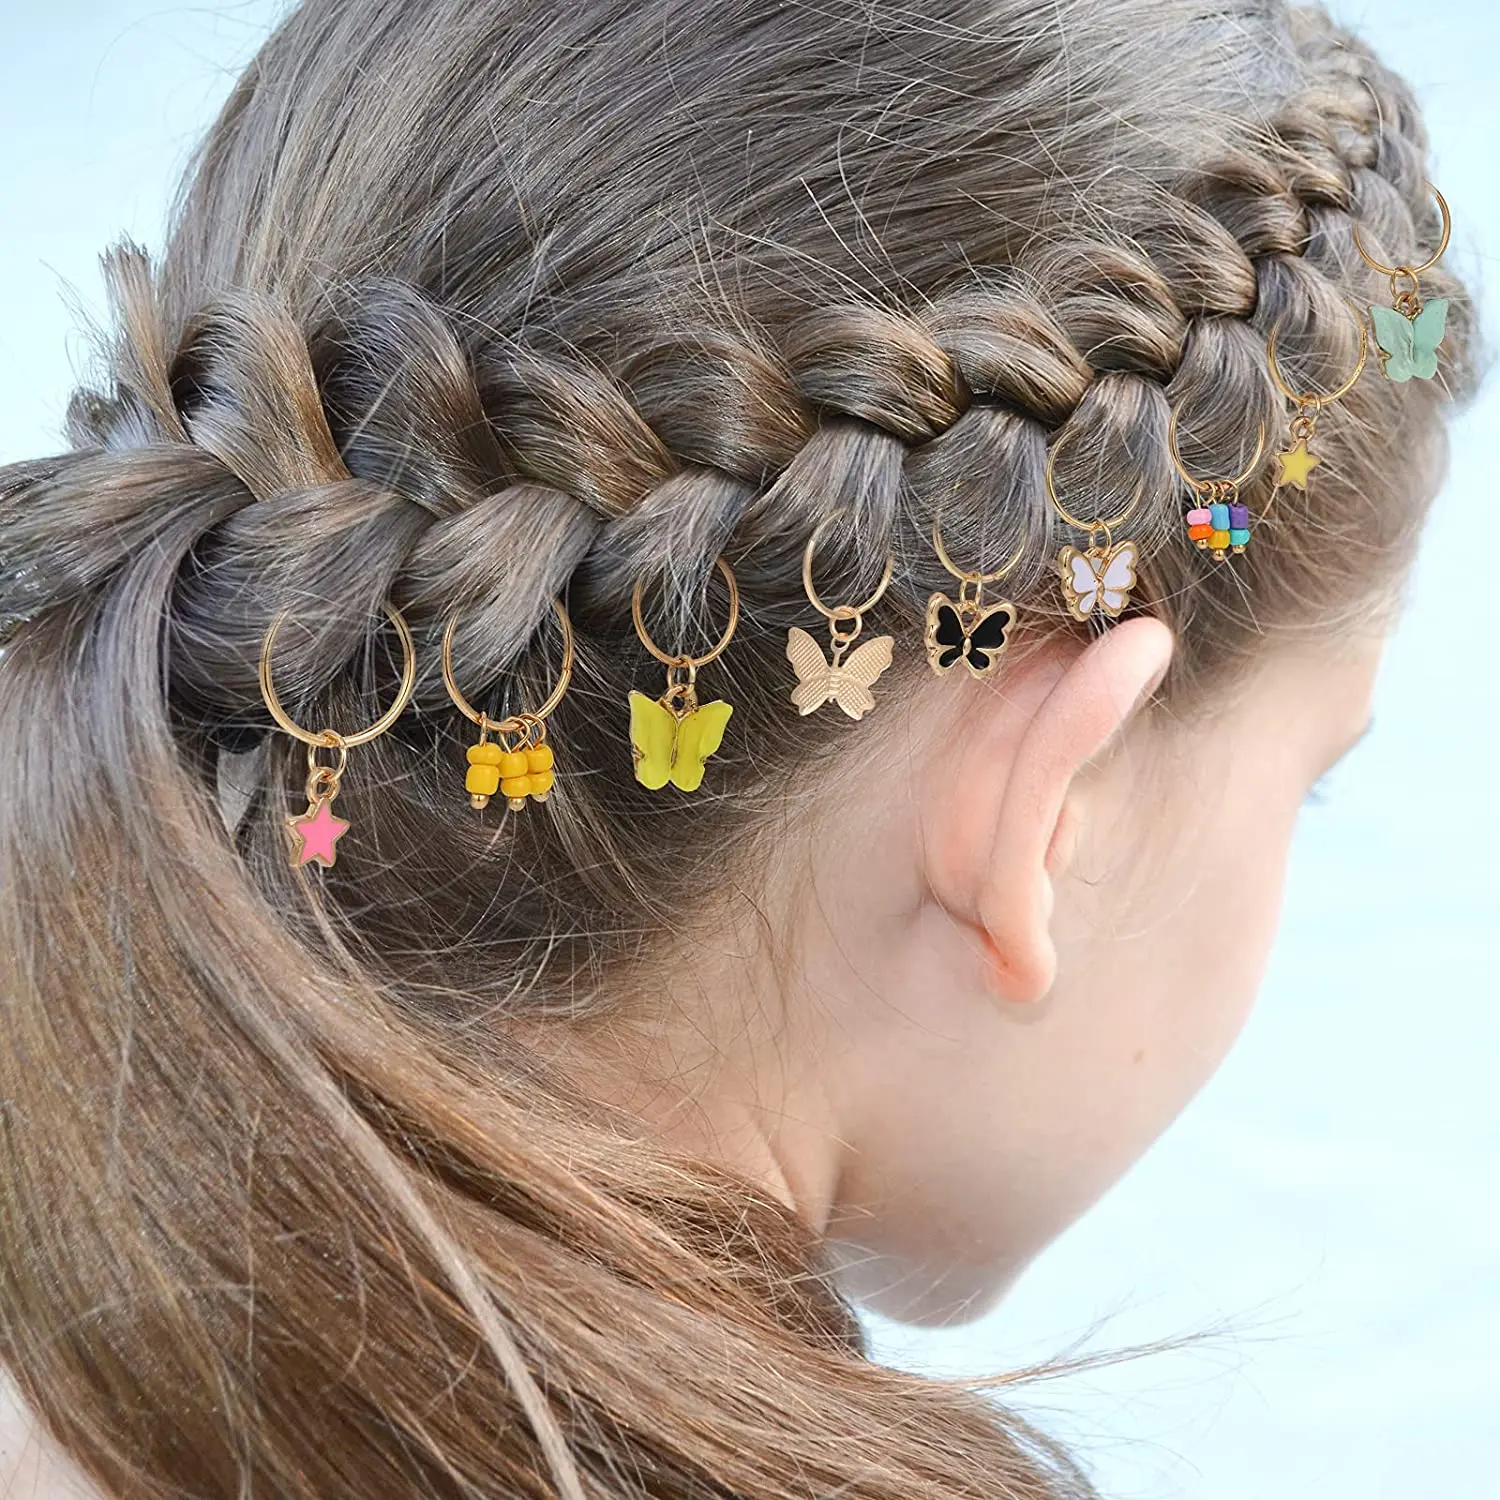 20pcs Butterfly Hair Clips Dreadlock Accessories Hair Jewelry For Women  Braid,hair Cuffs Charms Rings Braid Clips Golden Butterfly Hair Accessories  (s